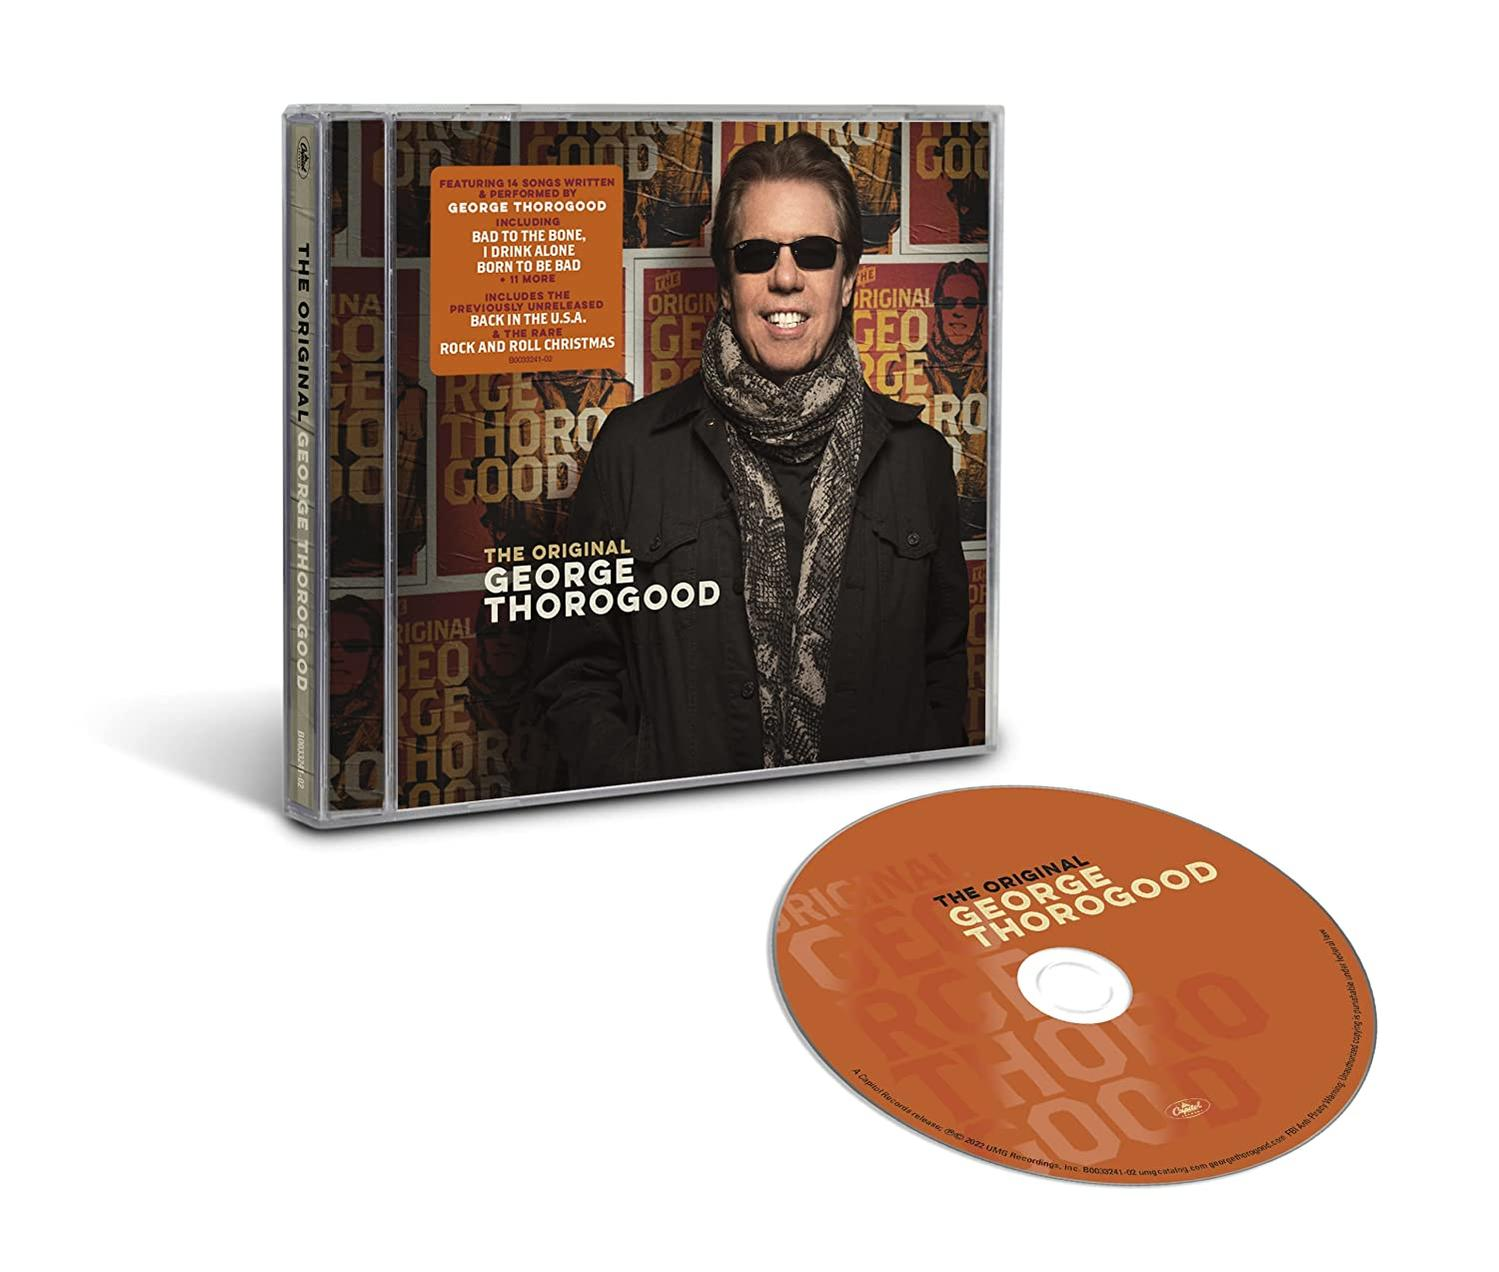 George Thorogood (CD) - Original - The